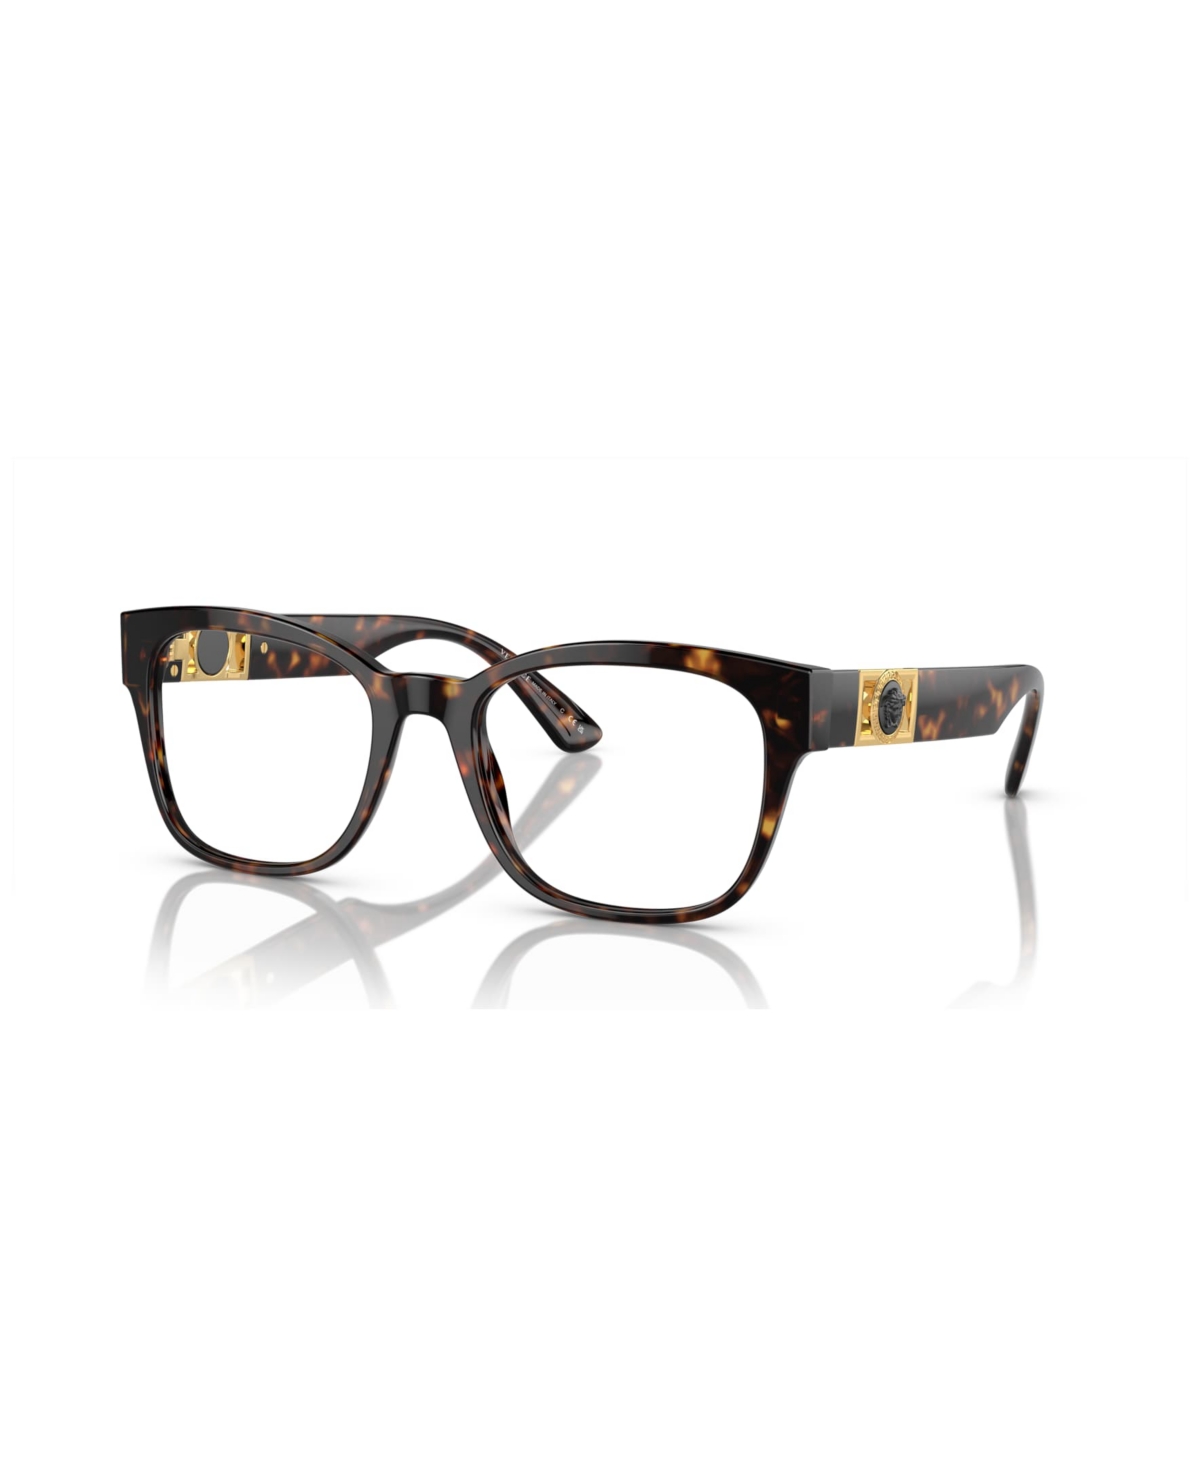 Men's Eyeglasses, VE3314 - Havana